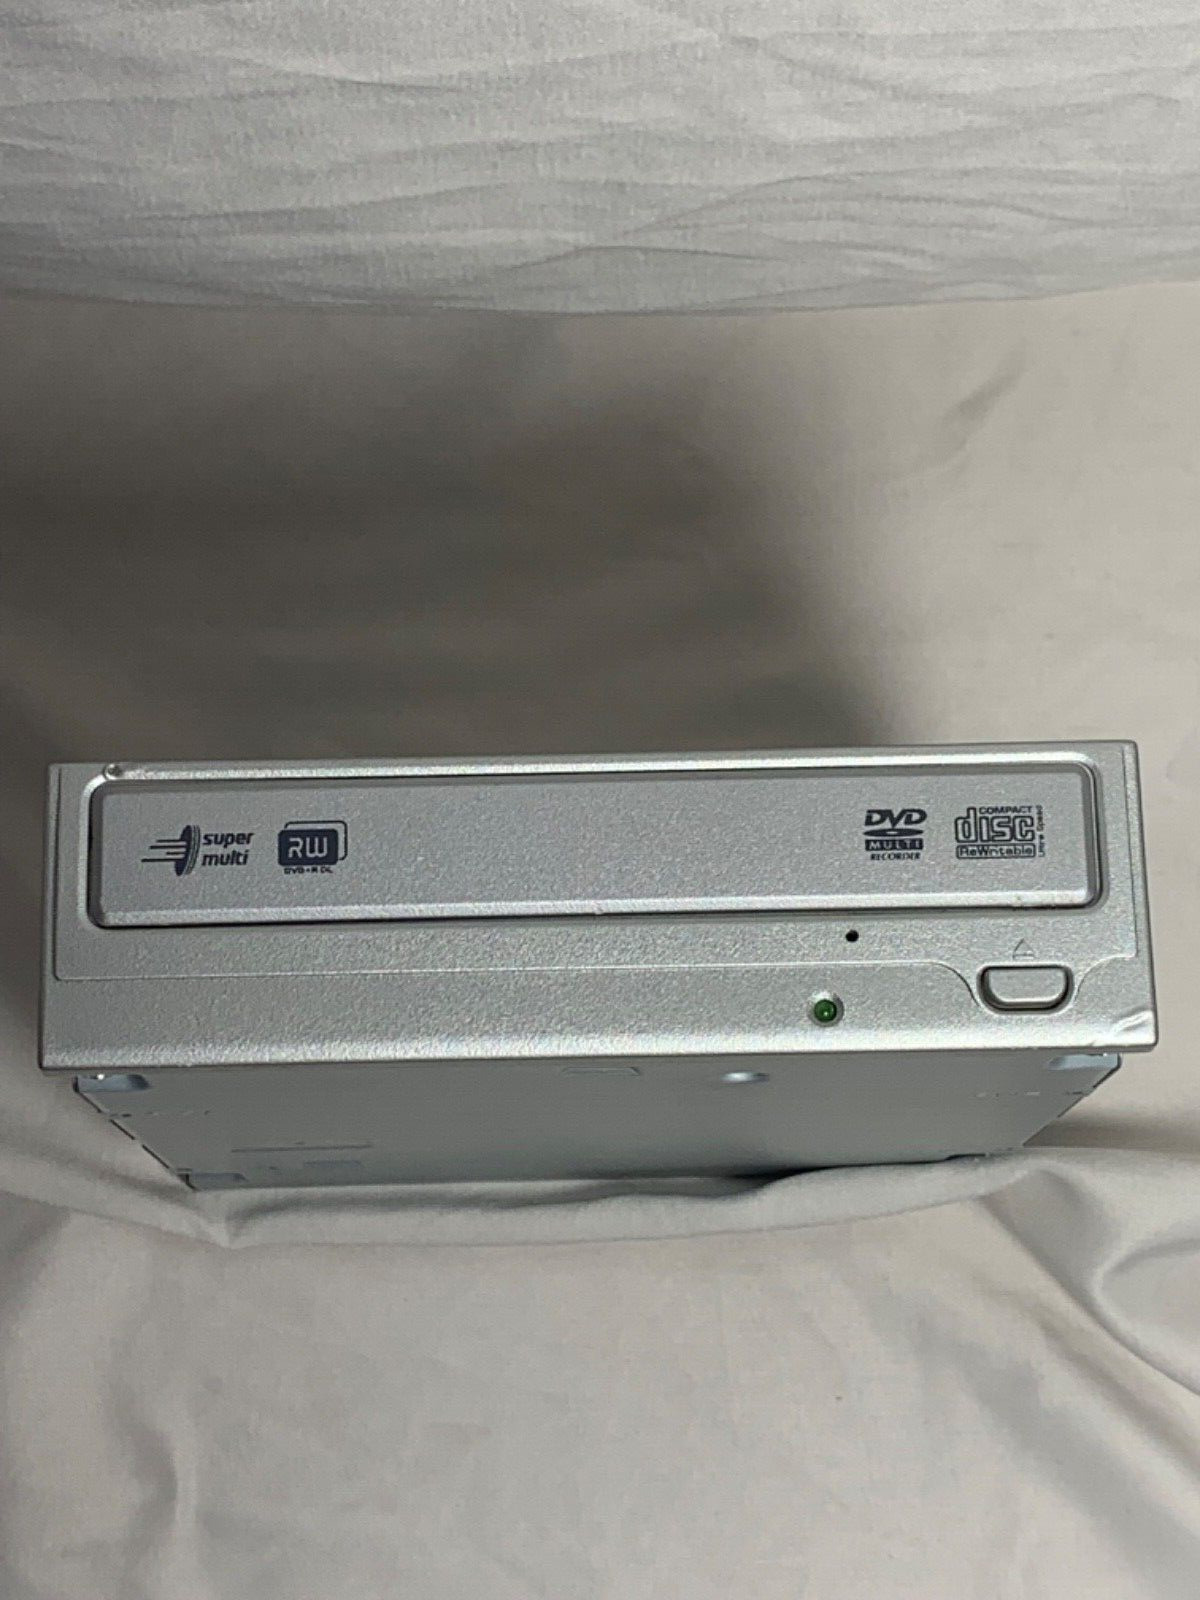 LG GSA-H10A Super Multi Internal DVD+RW Rewriter Drive -untested